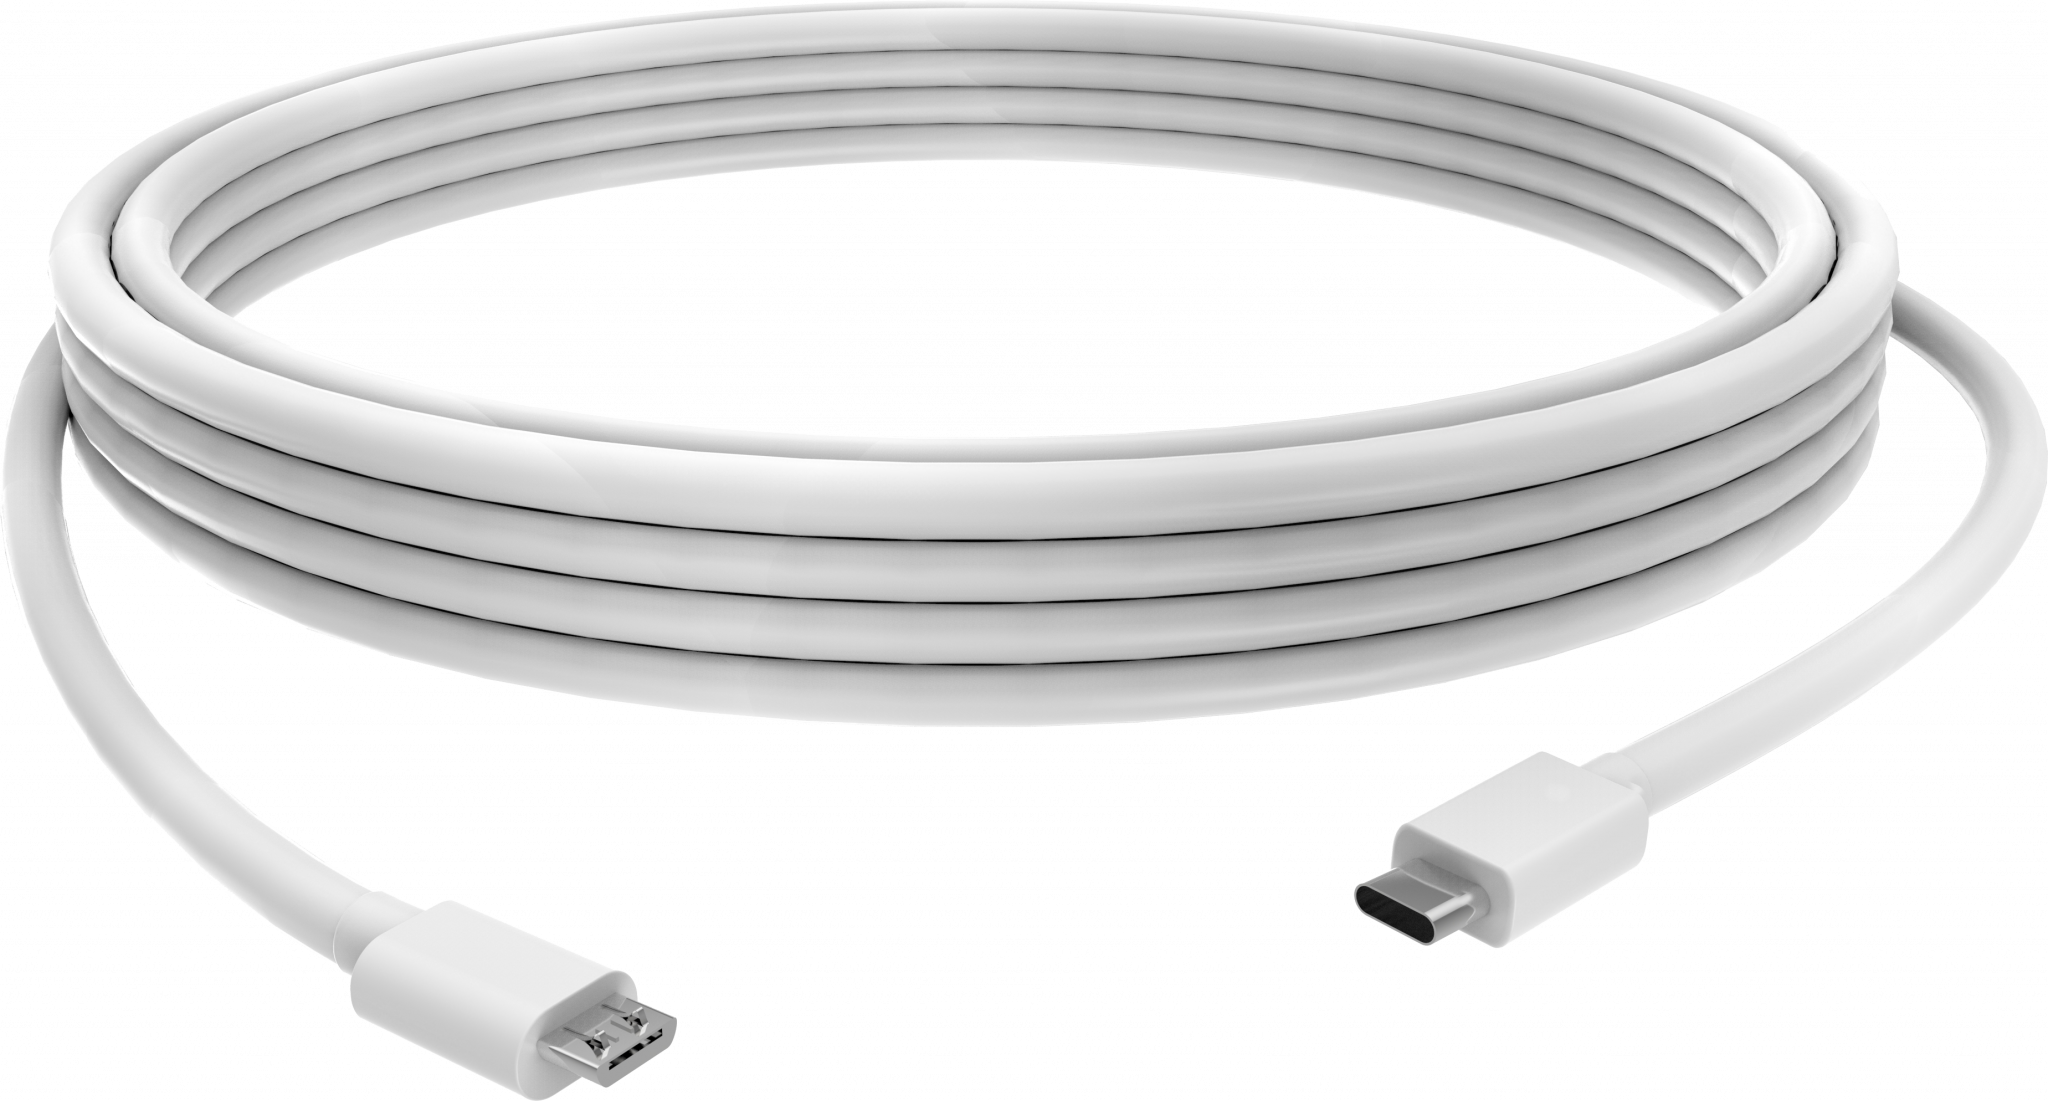 Commo usb c. USB кабель Case-32d Micro. Белый кабель микро УСБ. Кабель Type-c-Micro-USB, 0.3 М 1 шт черный DJI. Кабель USB 360 led Type-c x-Cable.